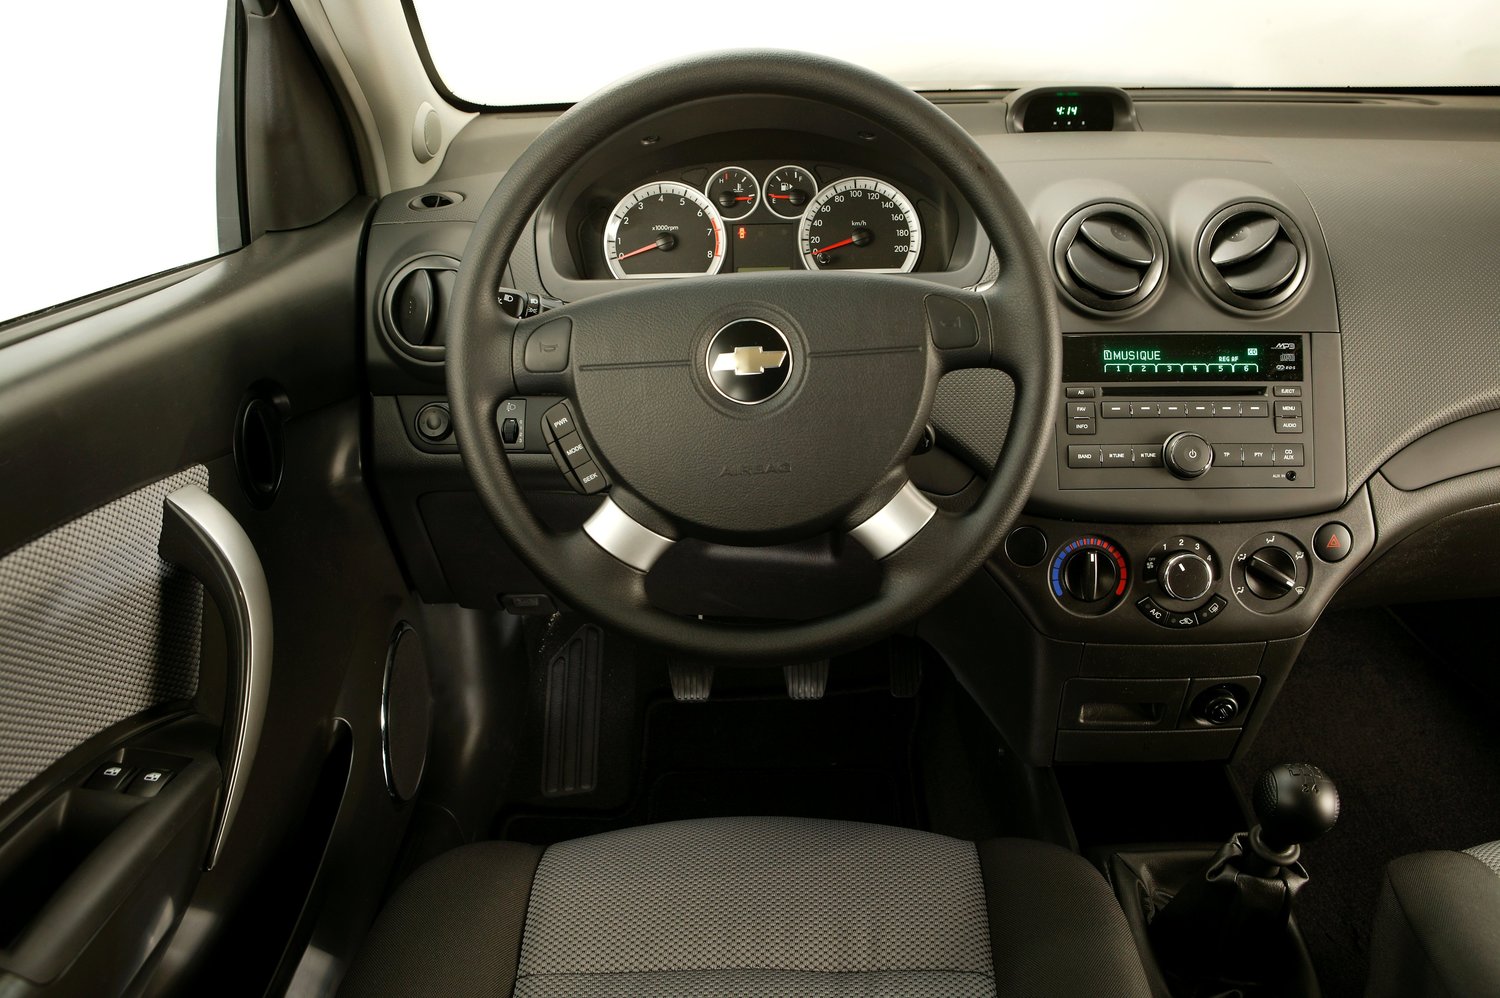 хэтчбек 5 дв. Chevrolet Aveo 2006 - 2012г выпуска модификация Base 1.2 MT (84 л.с.)